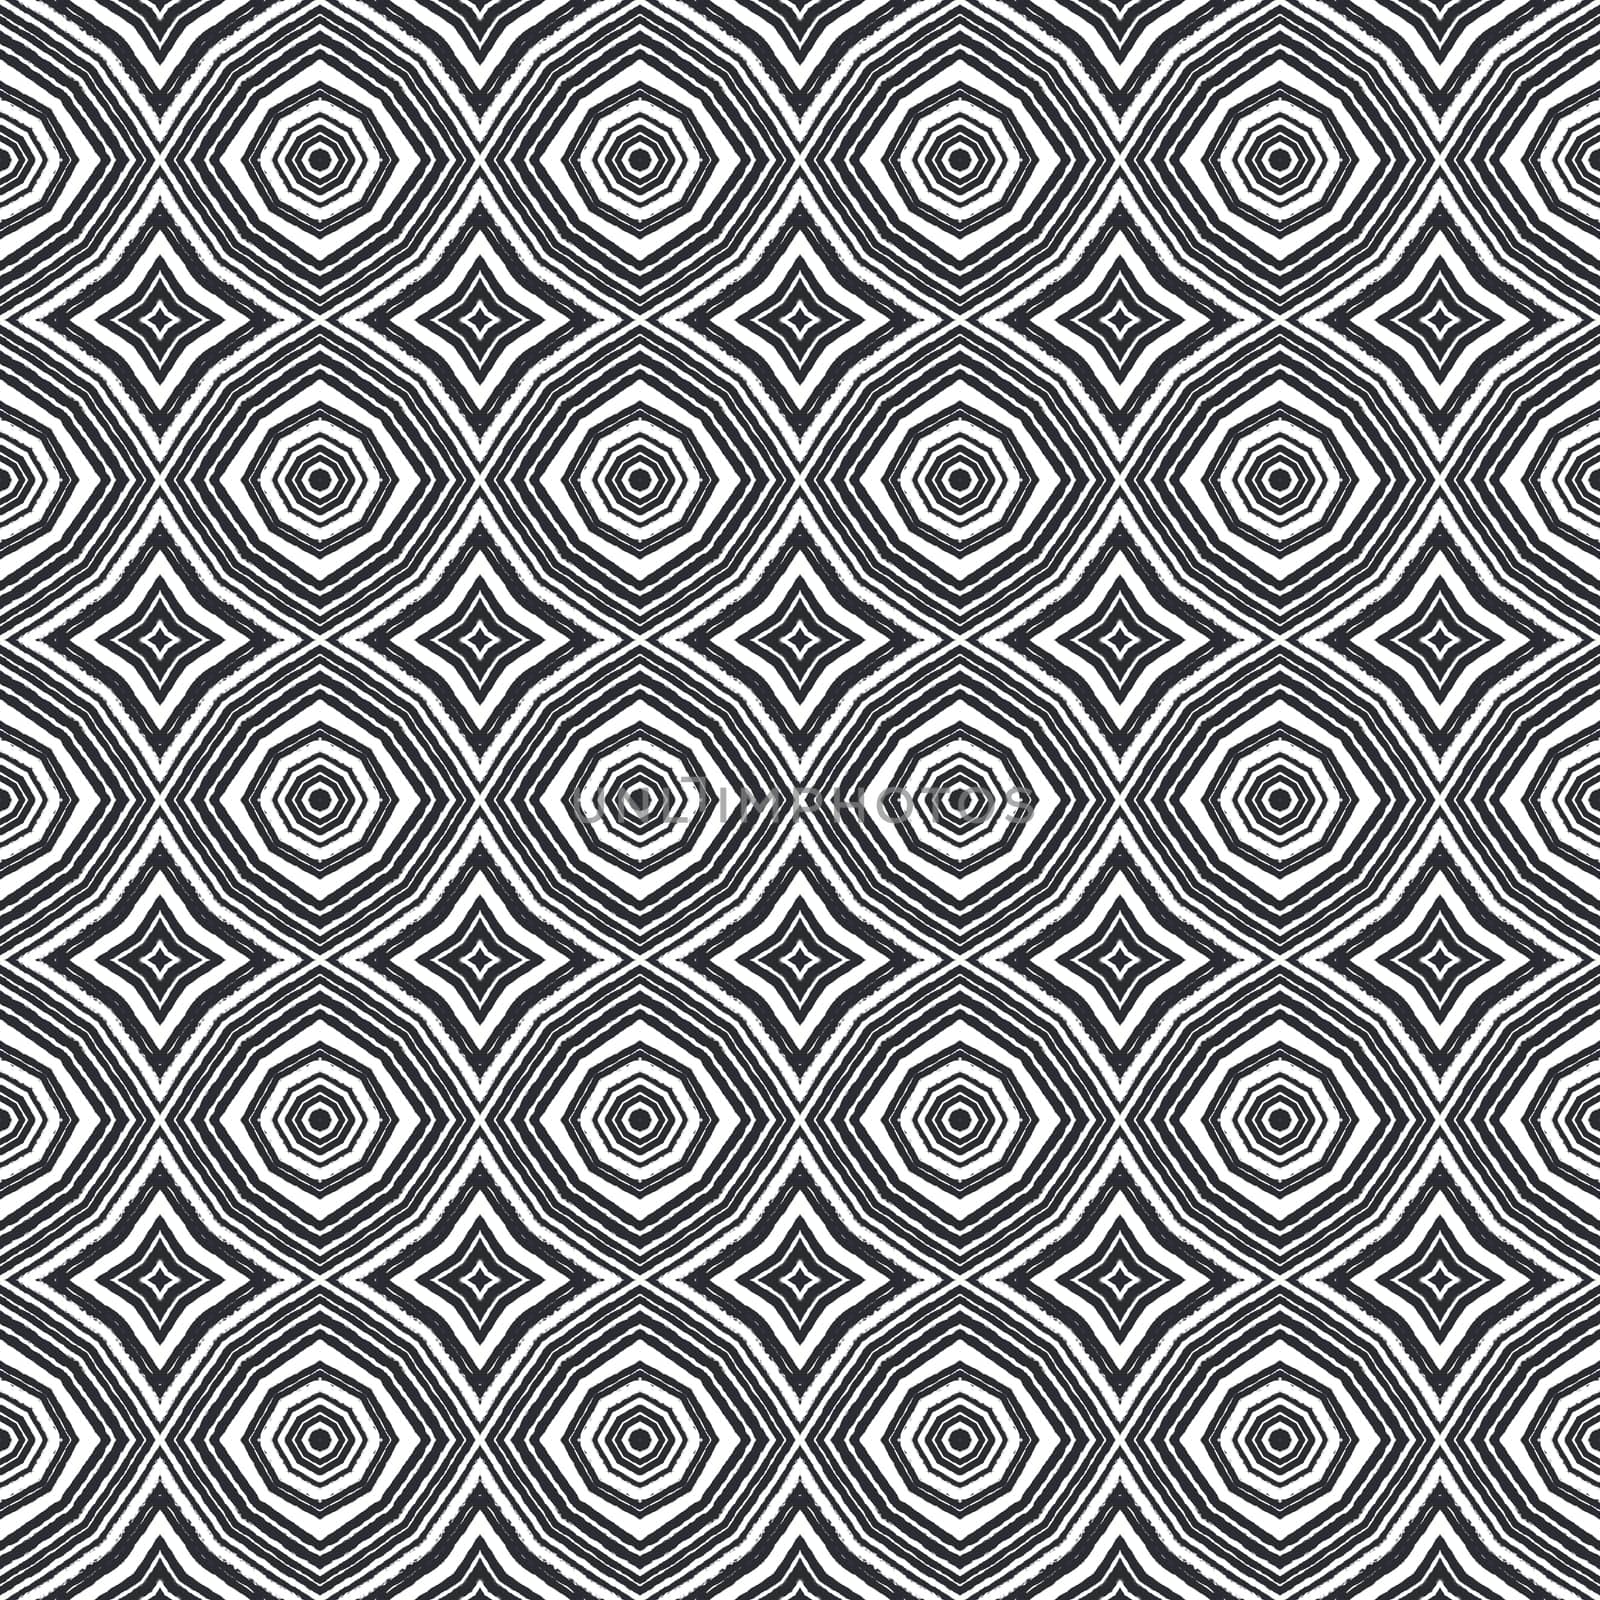 Arabesque hand drawn pattern. Black symmetrical kaleidoscope background. Oriental arabesque hand drawn design. Textile ready sublime print, swimwear fabric, wallpaper, wrapping.